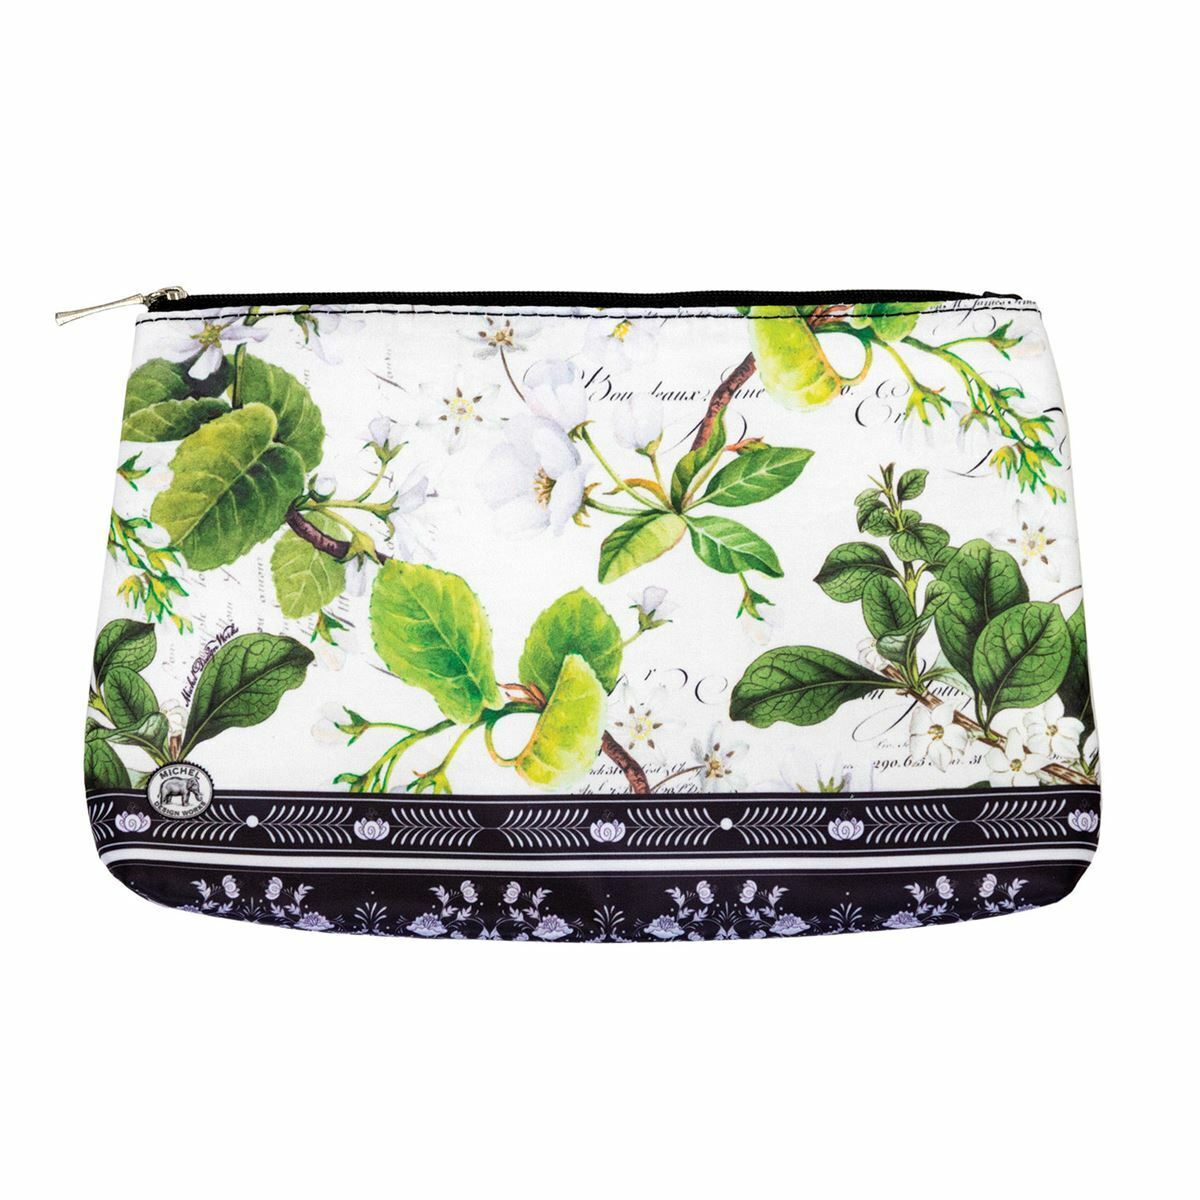 Michel Design Works Medium Cosmetic Bag Bouquet Floral Black White - NEW